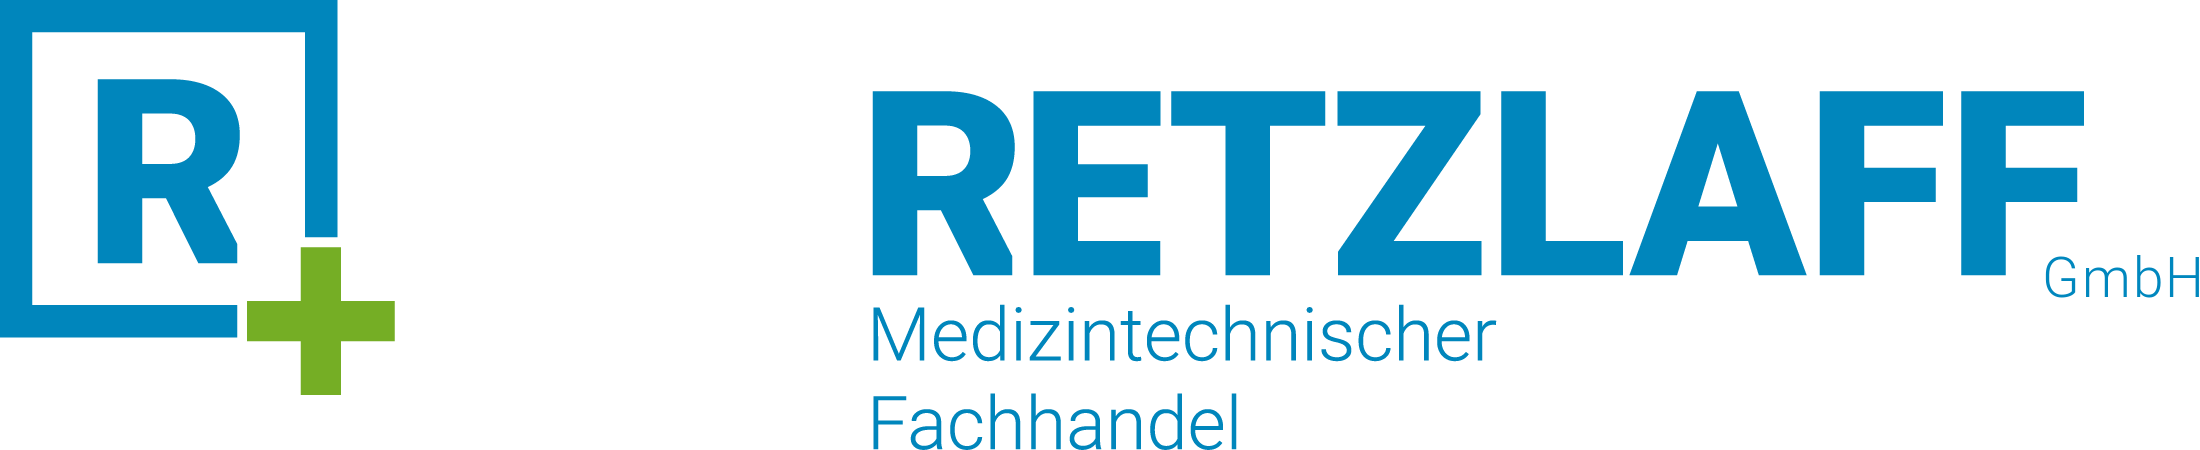 Medizintechnischer Fachhandel Retzlaff GmbH